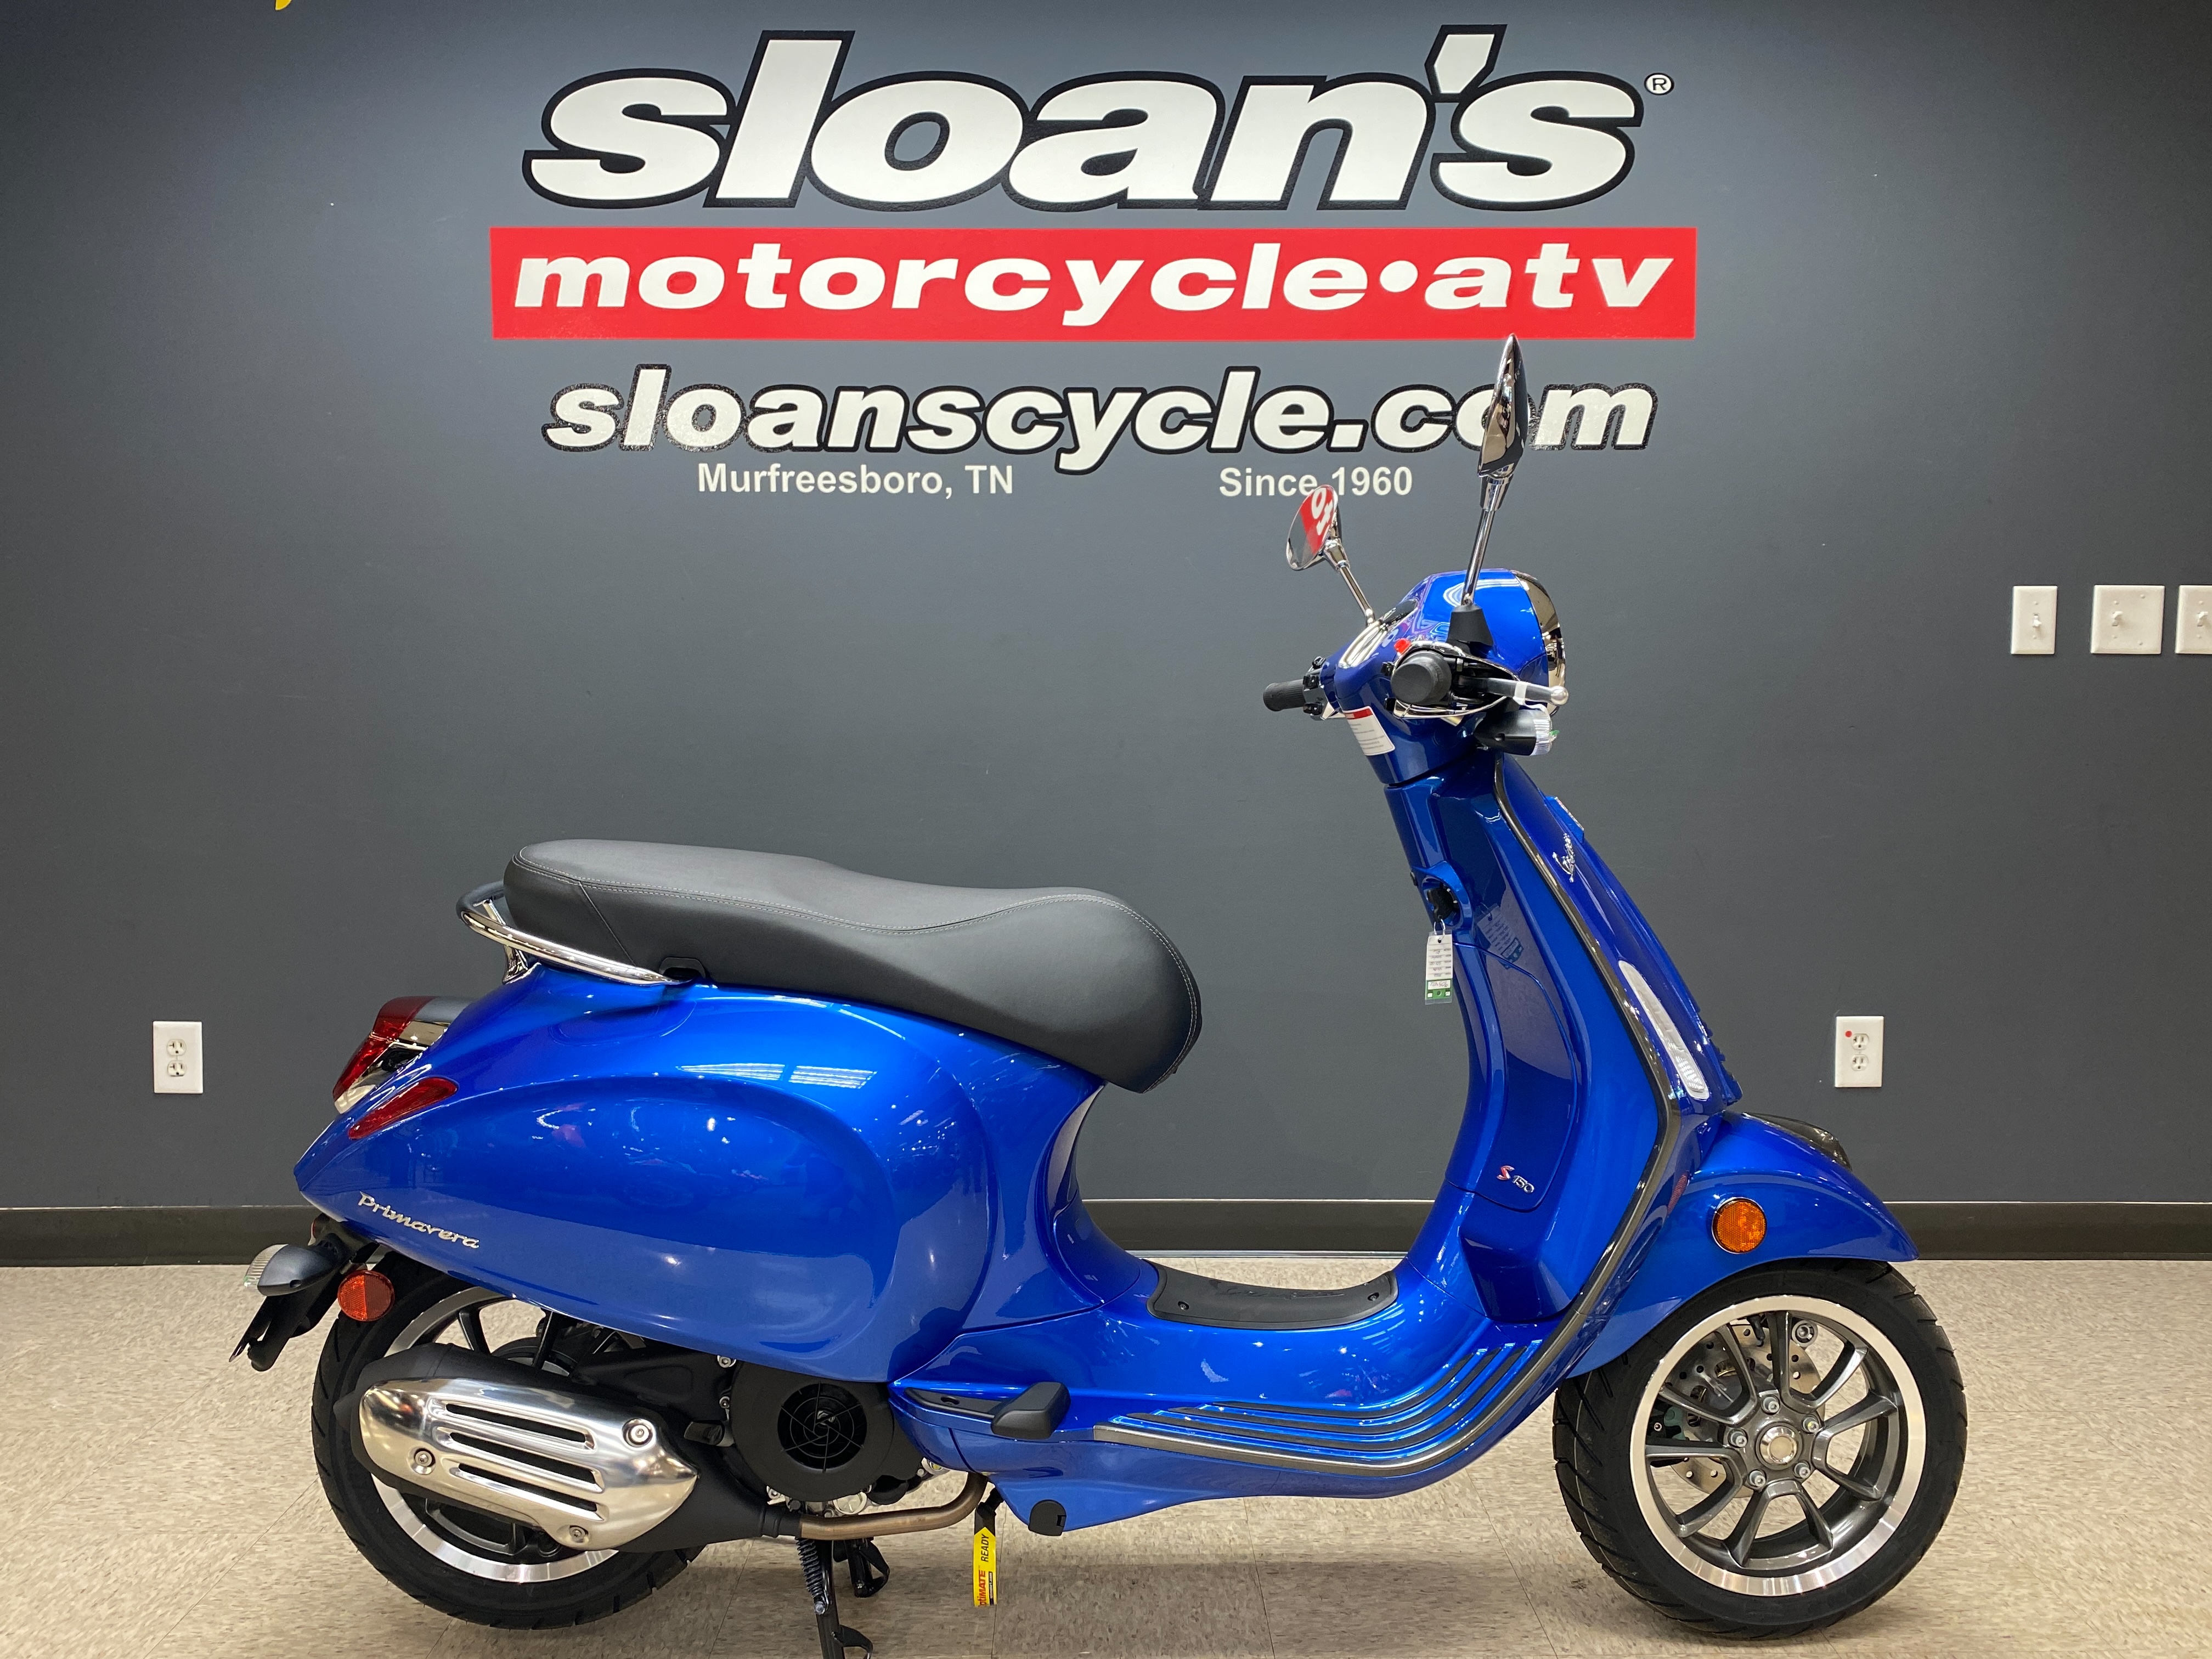 2022 Vespa PRIMAVERA S 150 ABS PRIMAVERA S 150 ABS at Sloans Motorcycle ATV, Murfreesboro, TN, 37129